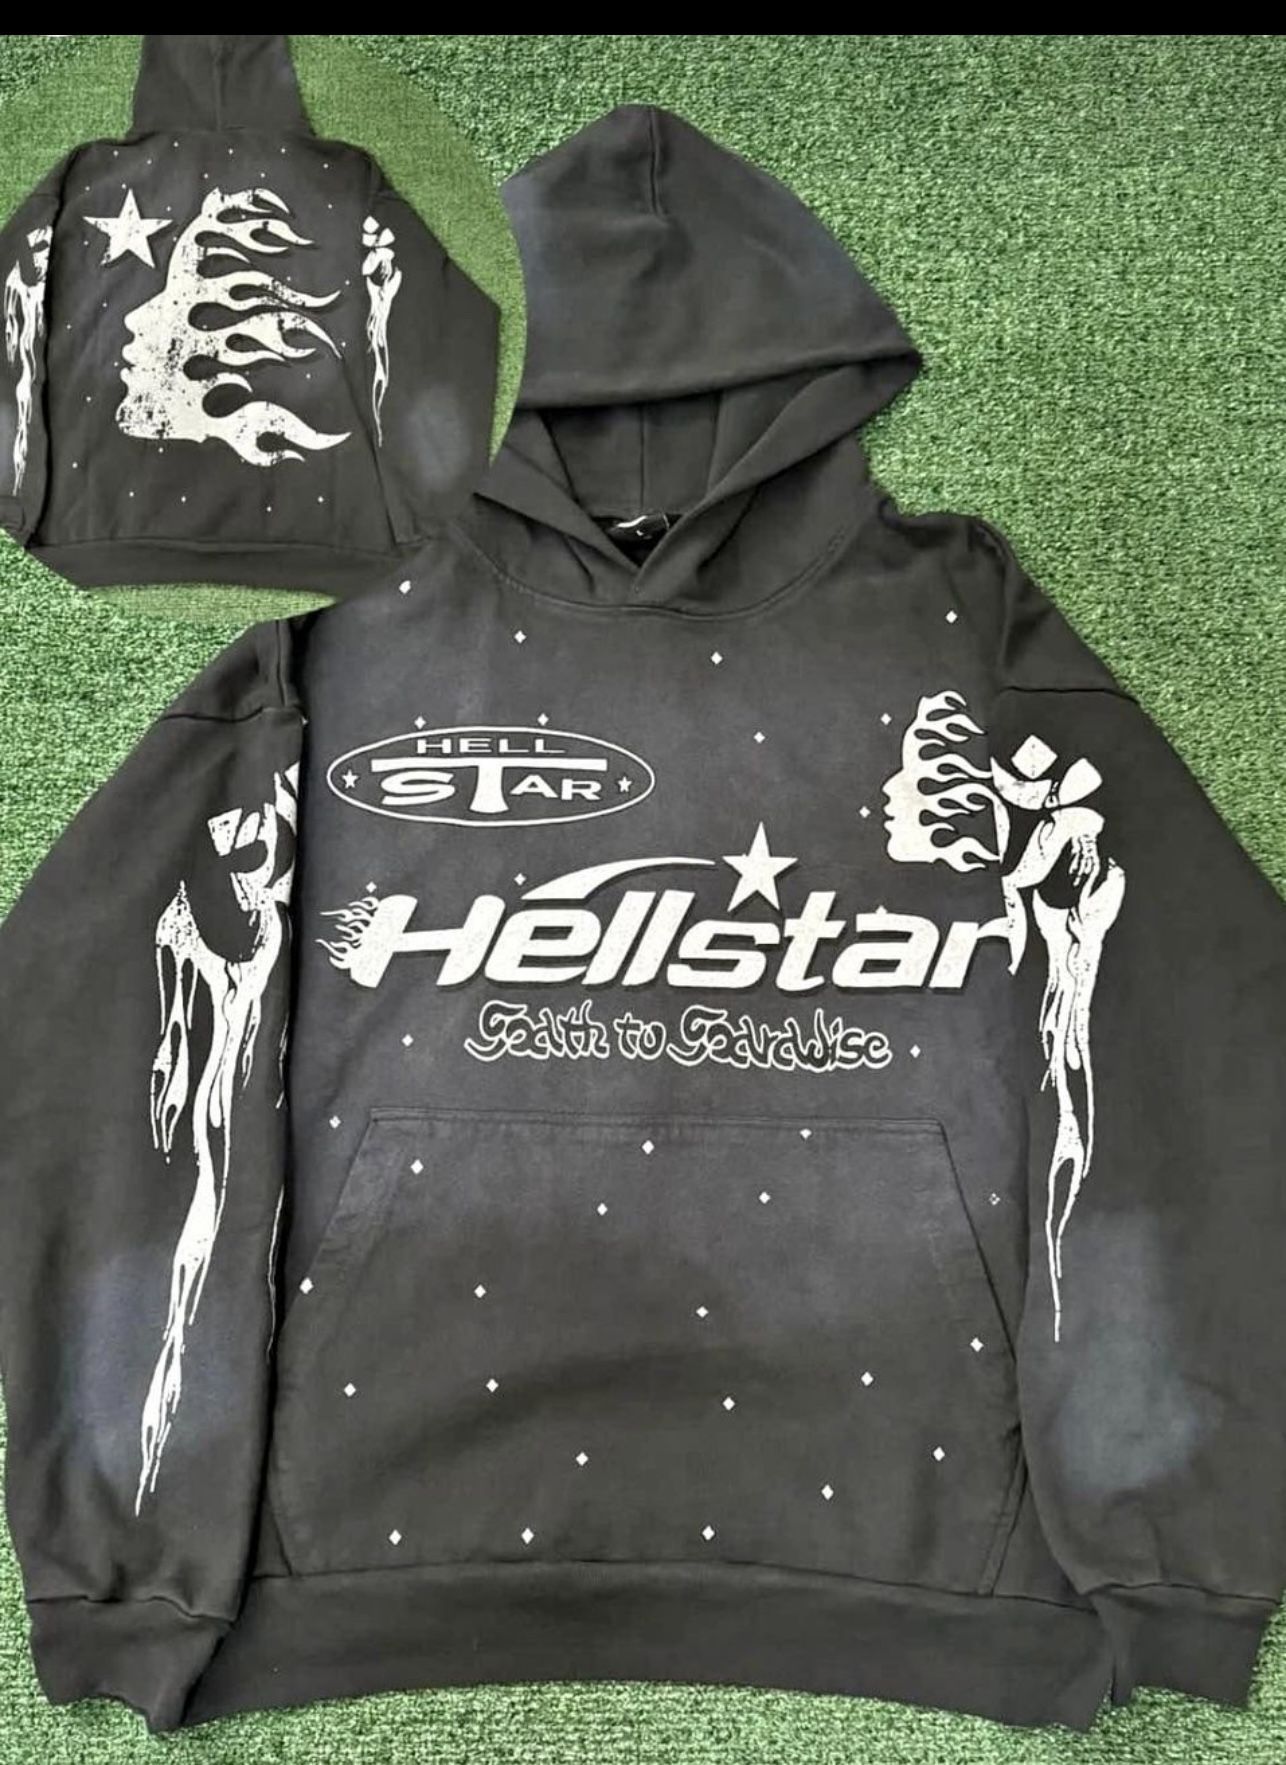 Hellstar Hoodie Size XL